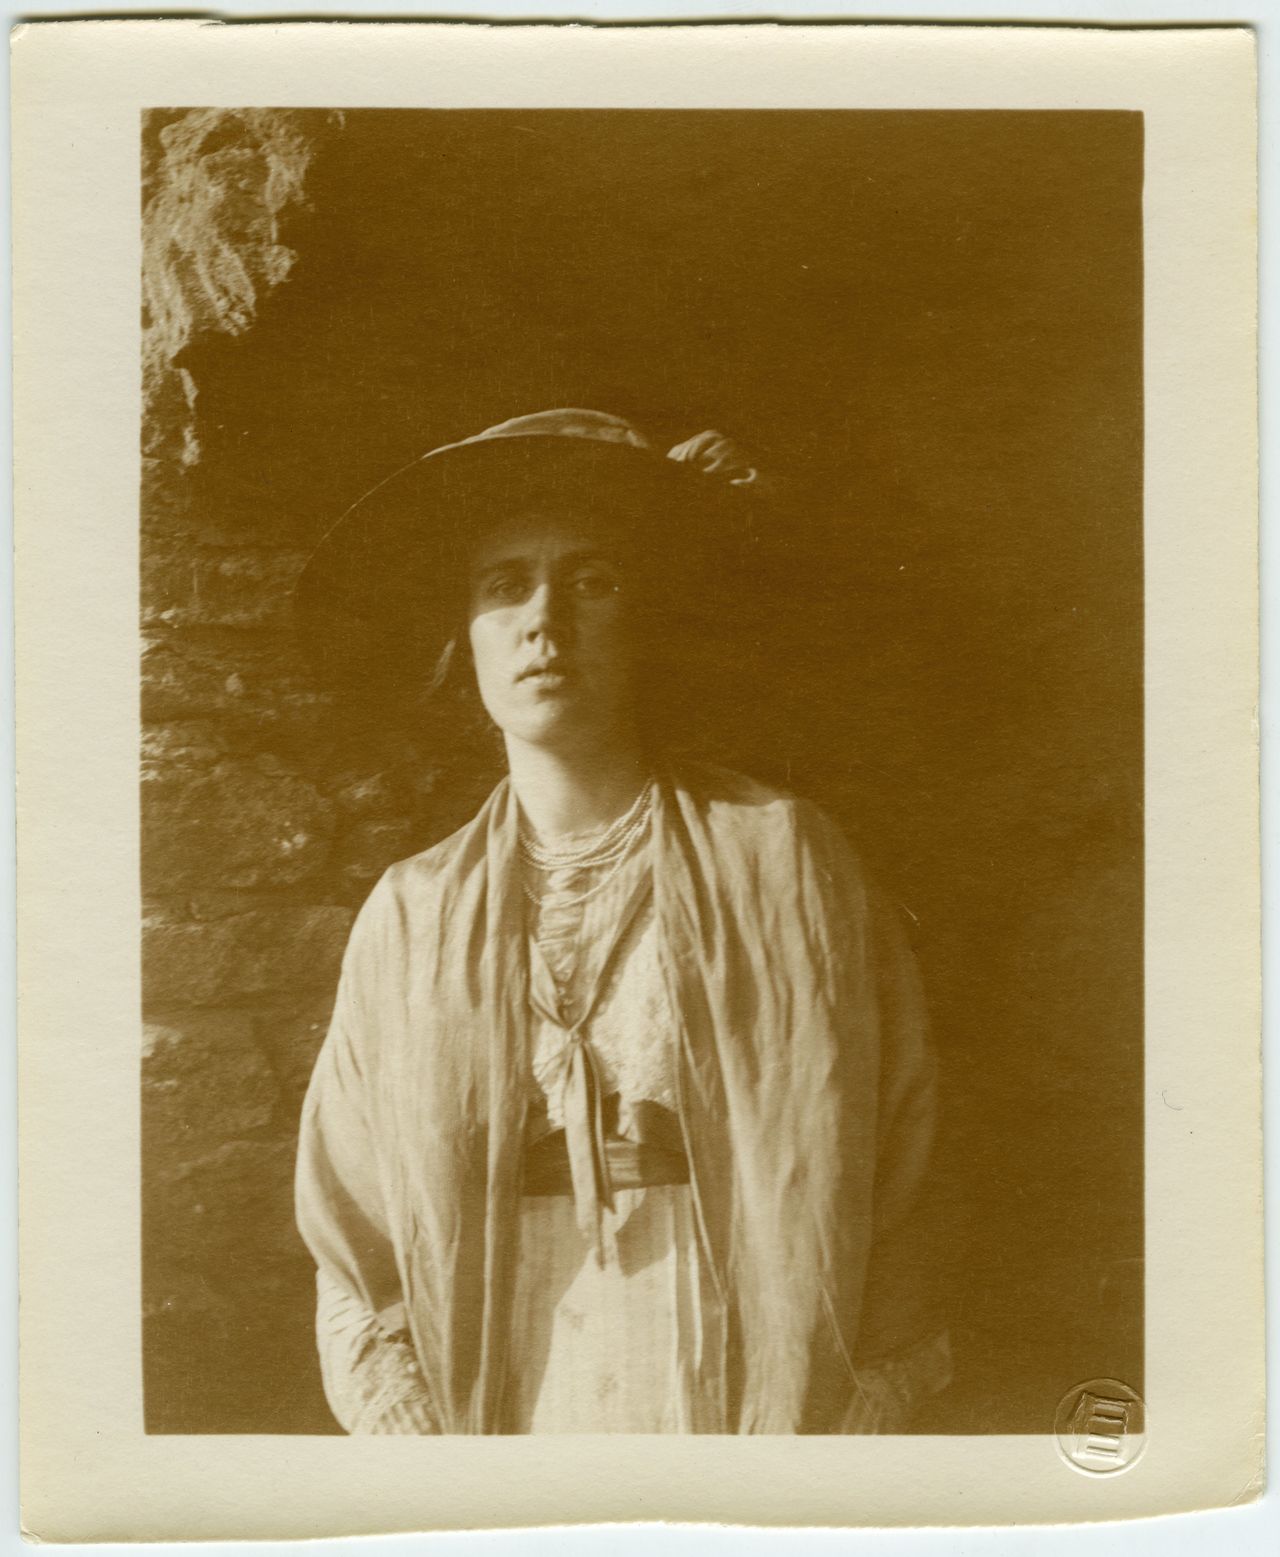 Portrait of Virginia Woolf by Vanessa Bell